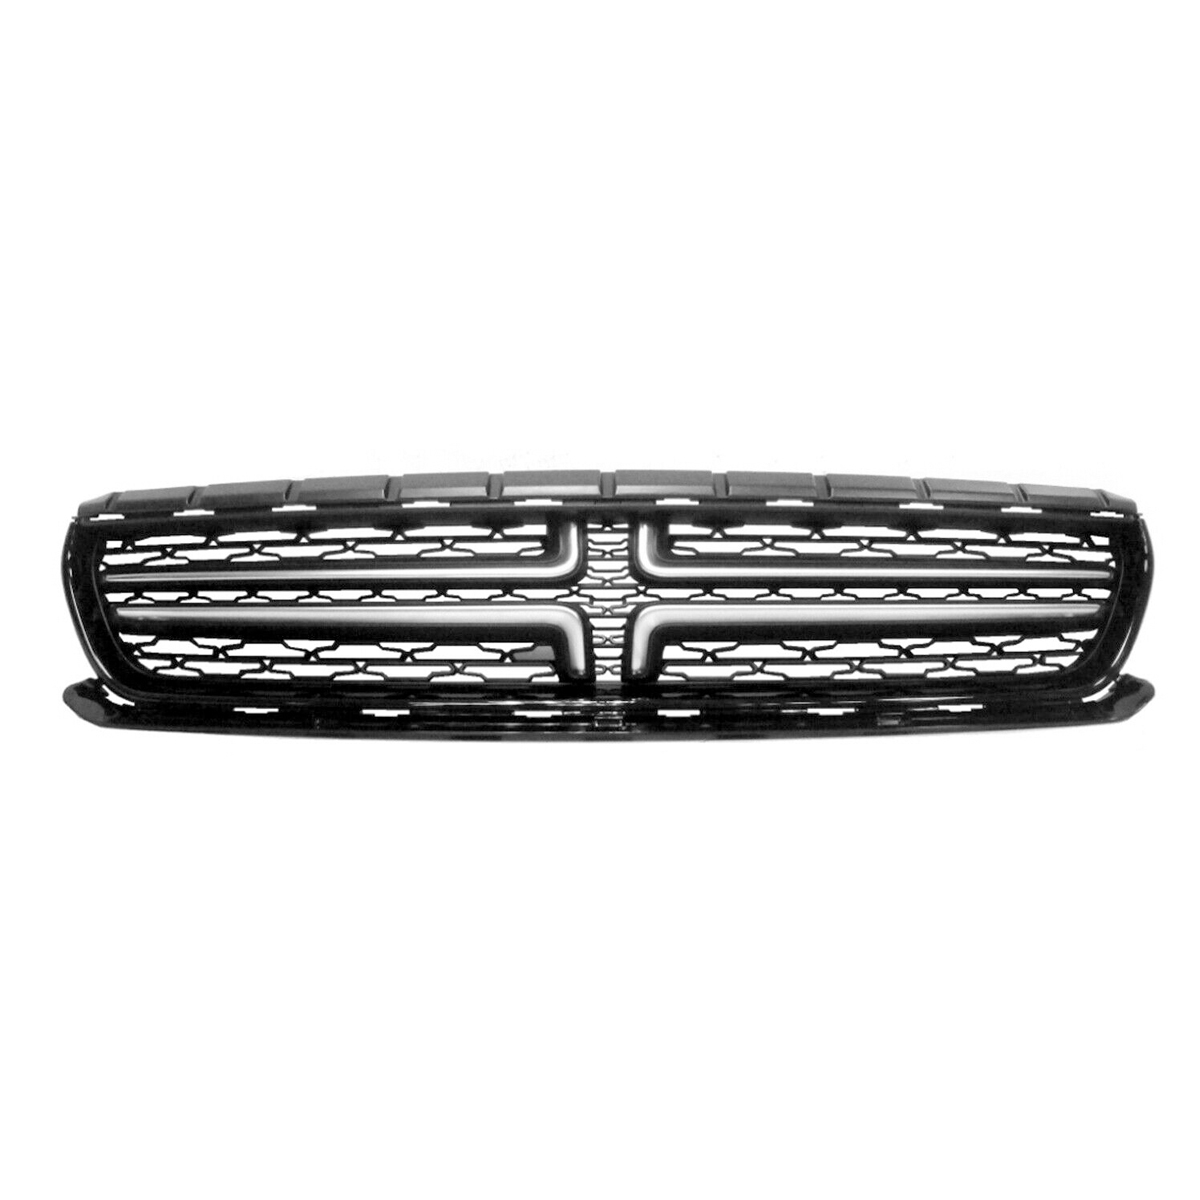 Rejilla de parrilla de parachoques superior delantera ABS negra y plateada para Dodge Charger 2015-2018